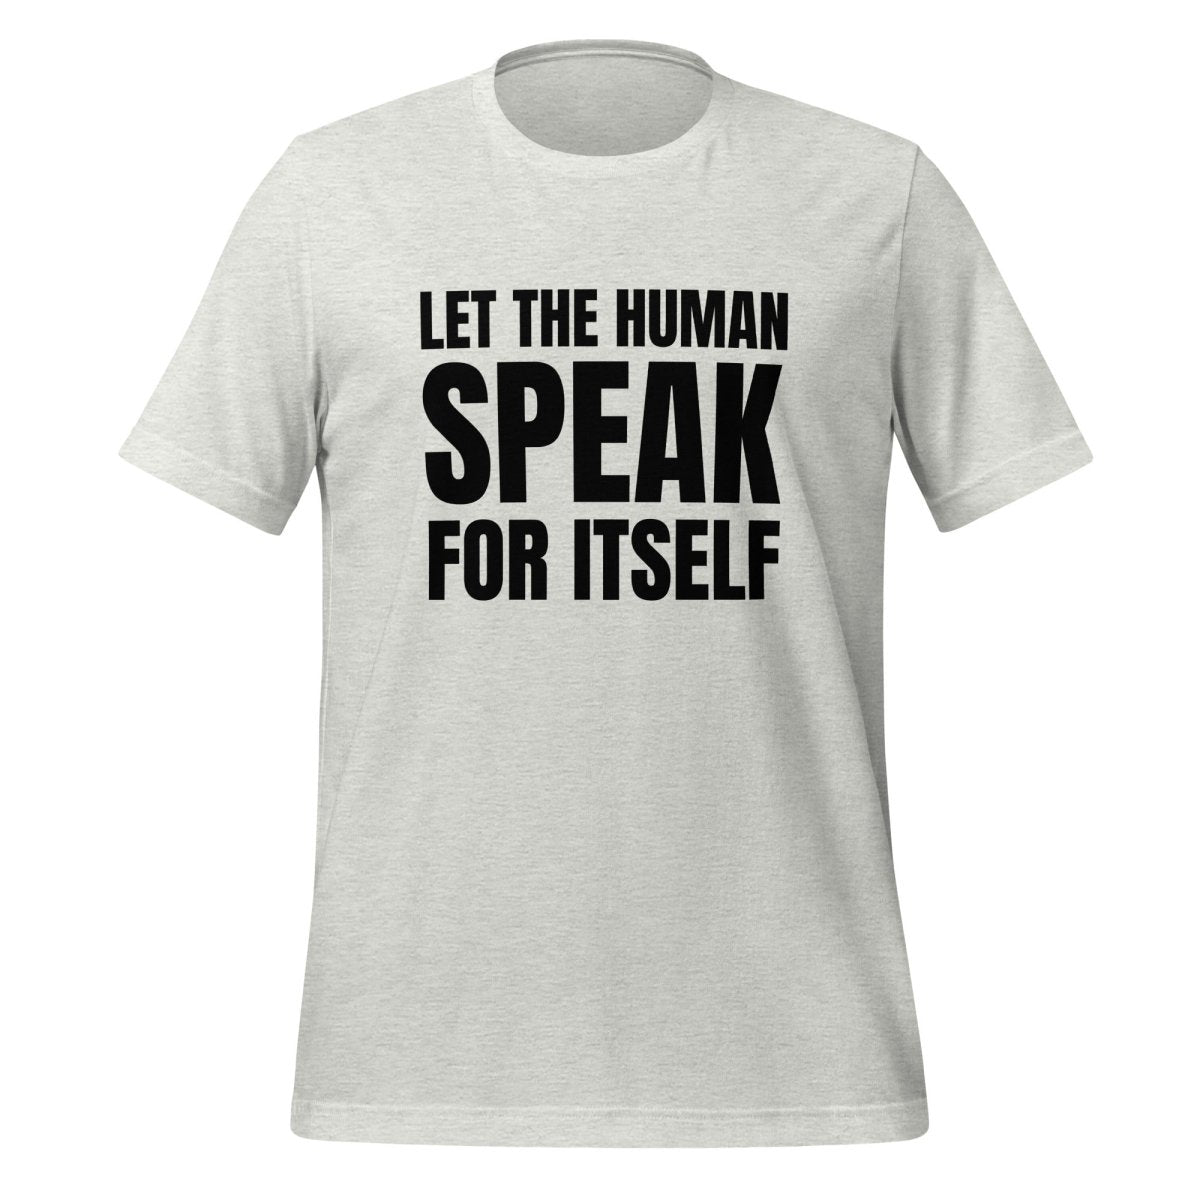 Let the Human Speak for Itself T - Shirt (unisex) - Ash - AI Store